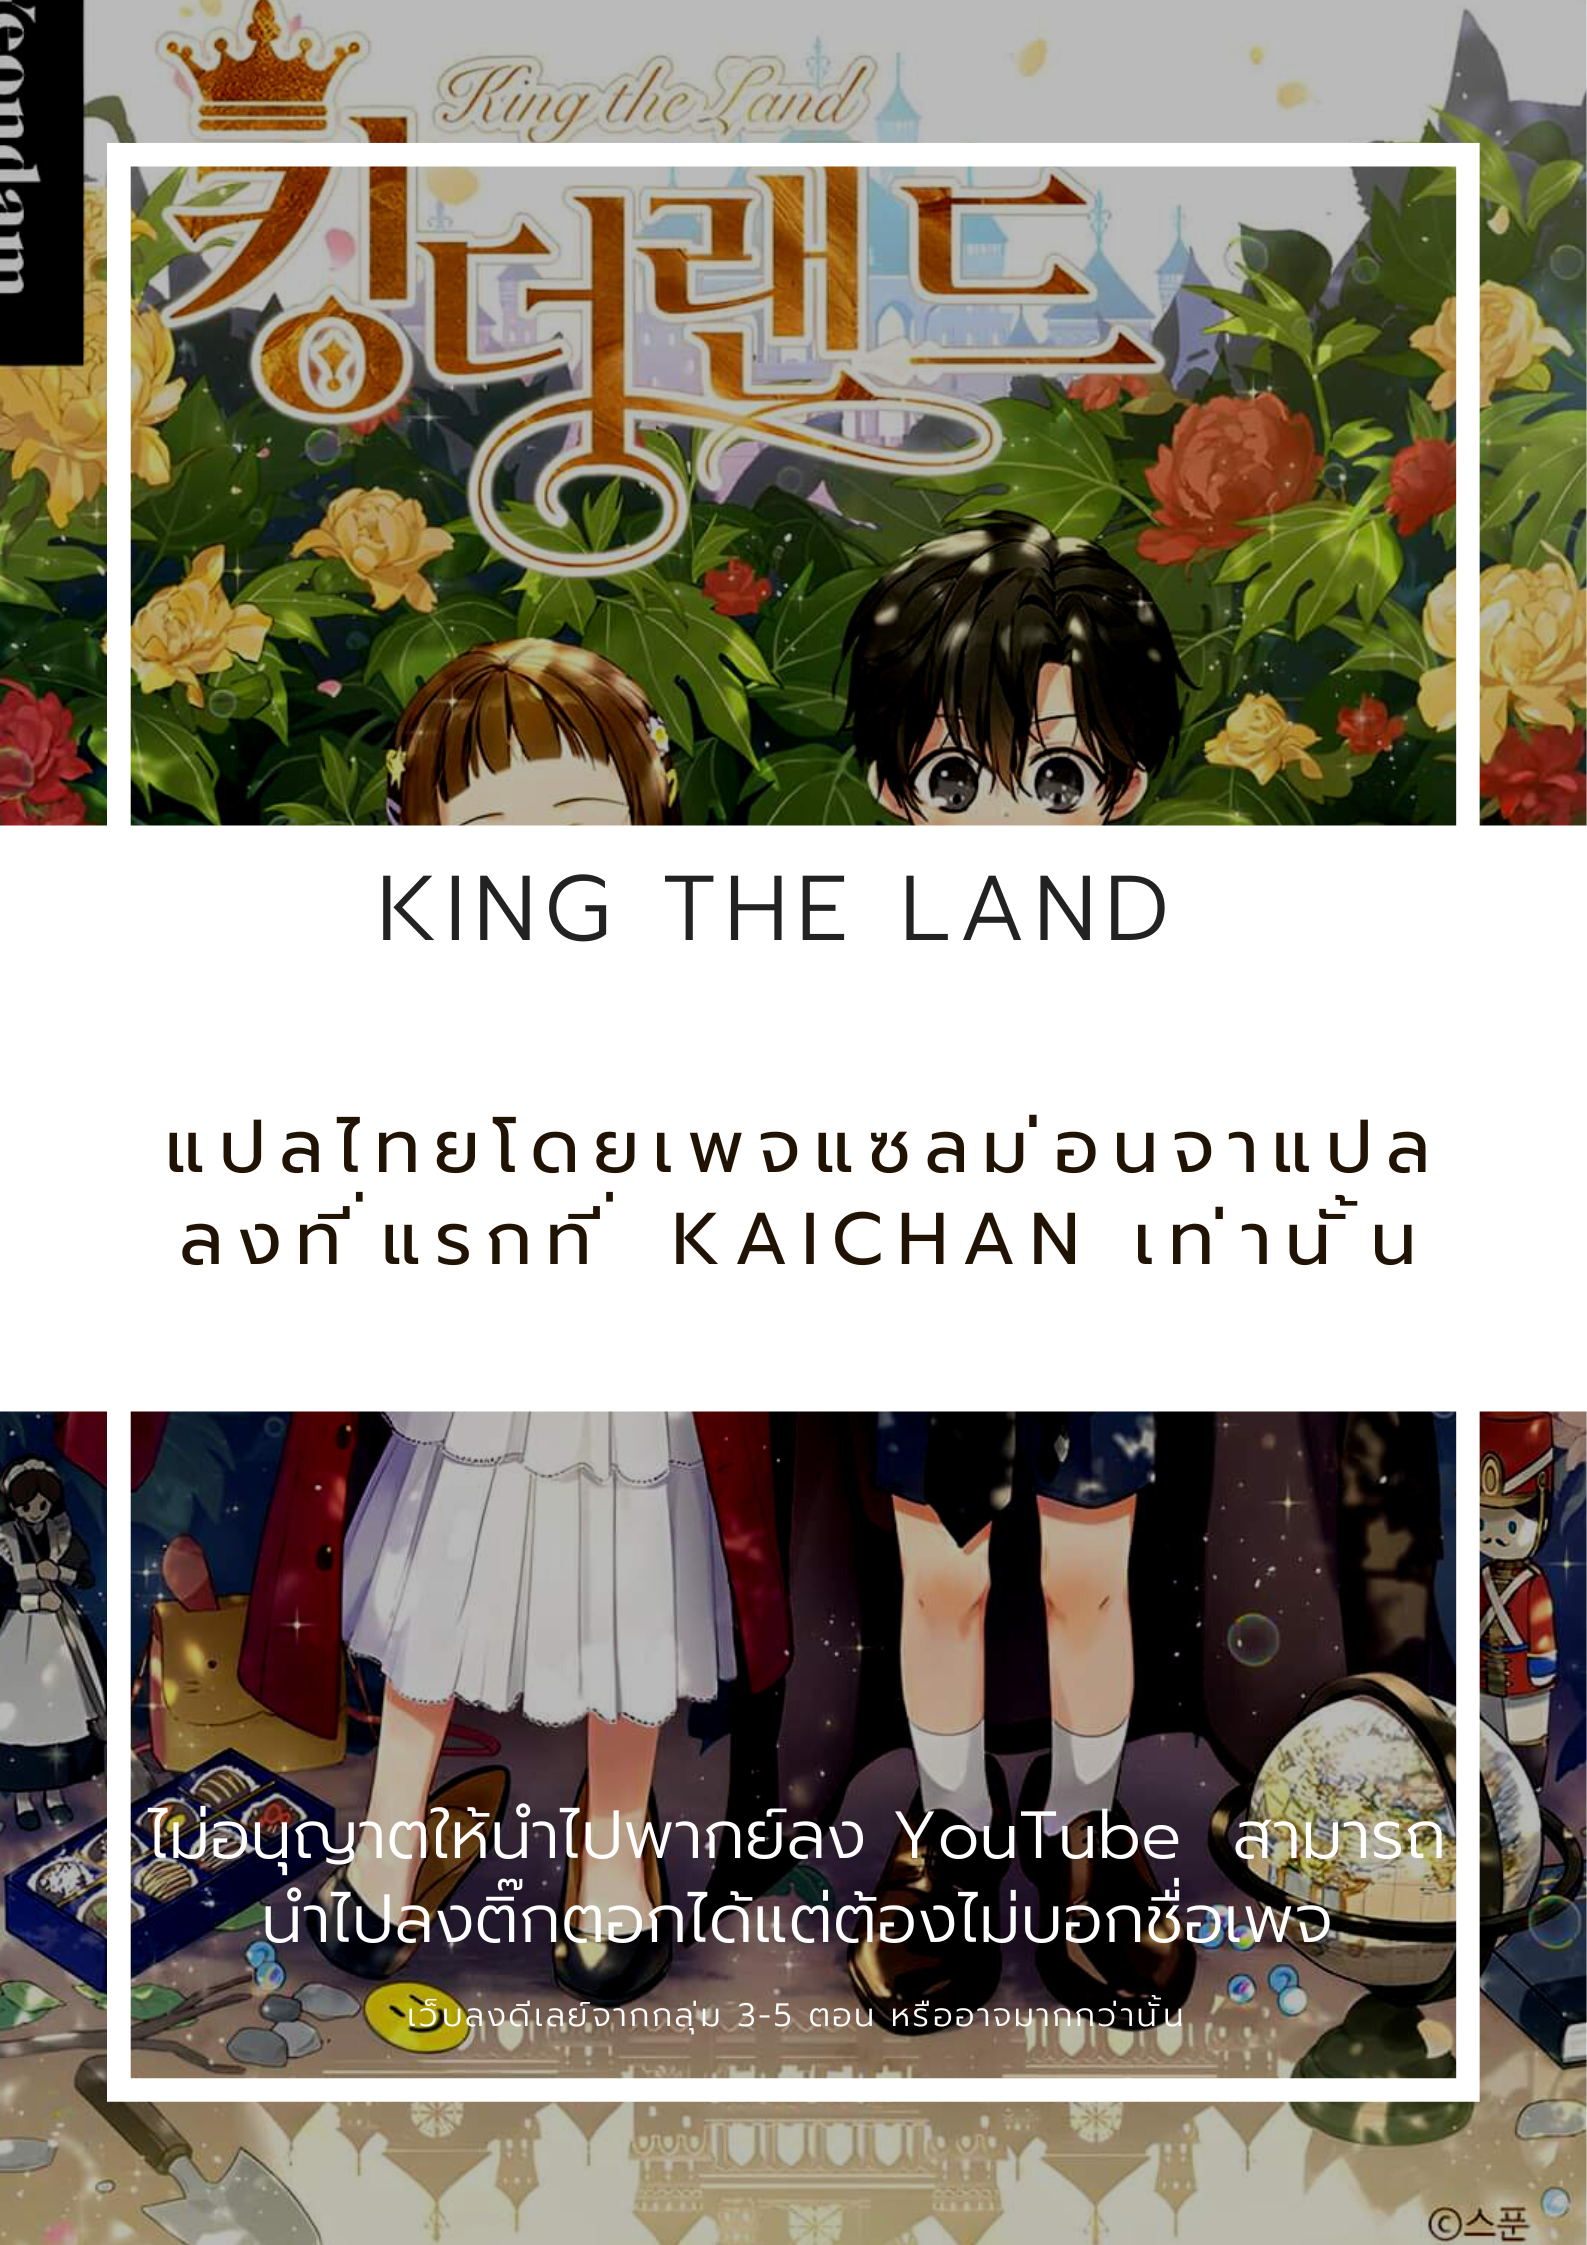 King the land ตอนที่ 2 (1)